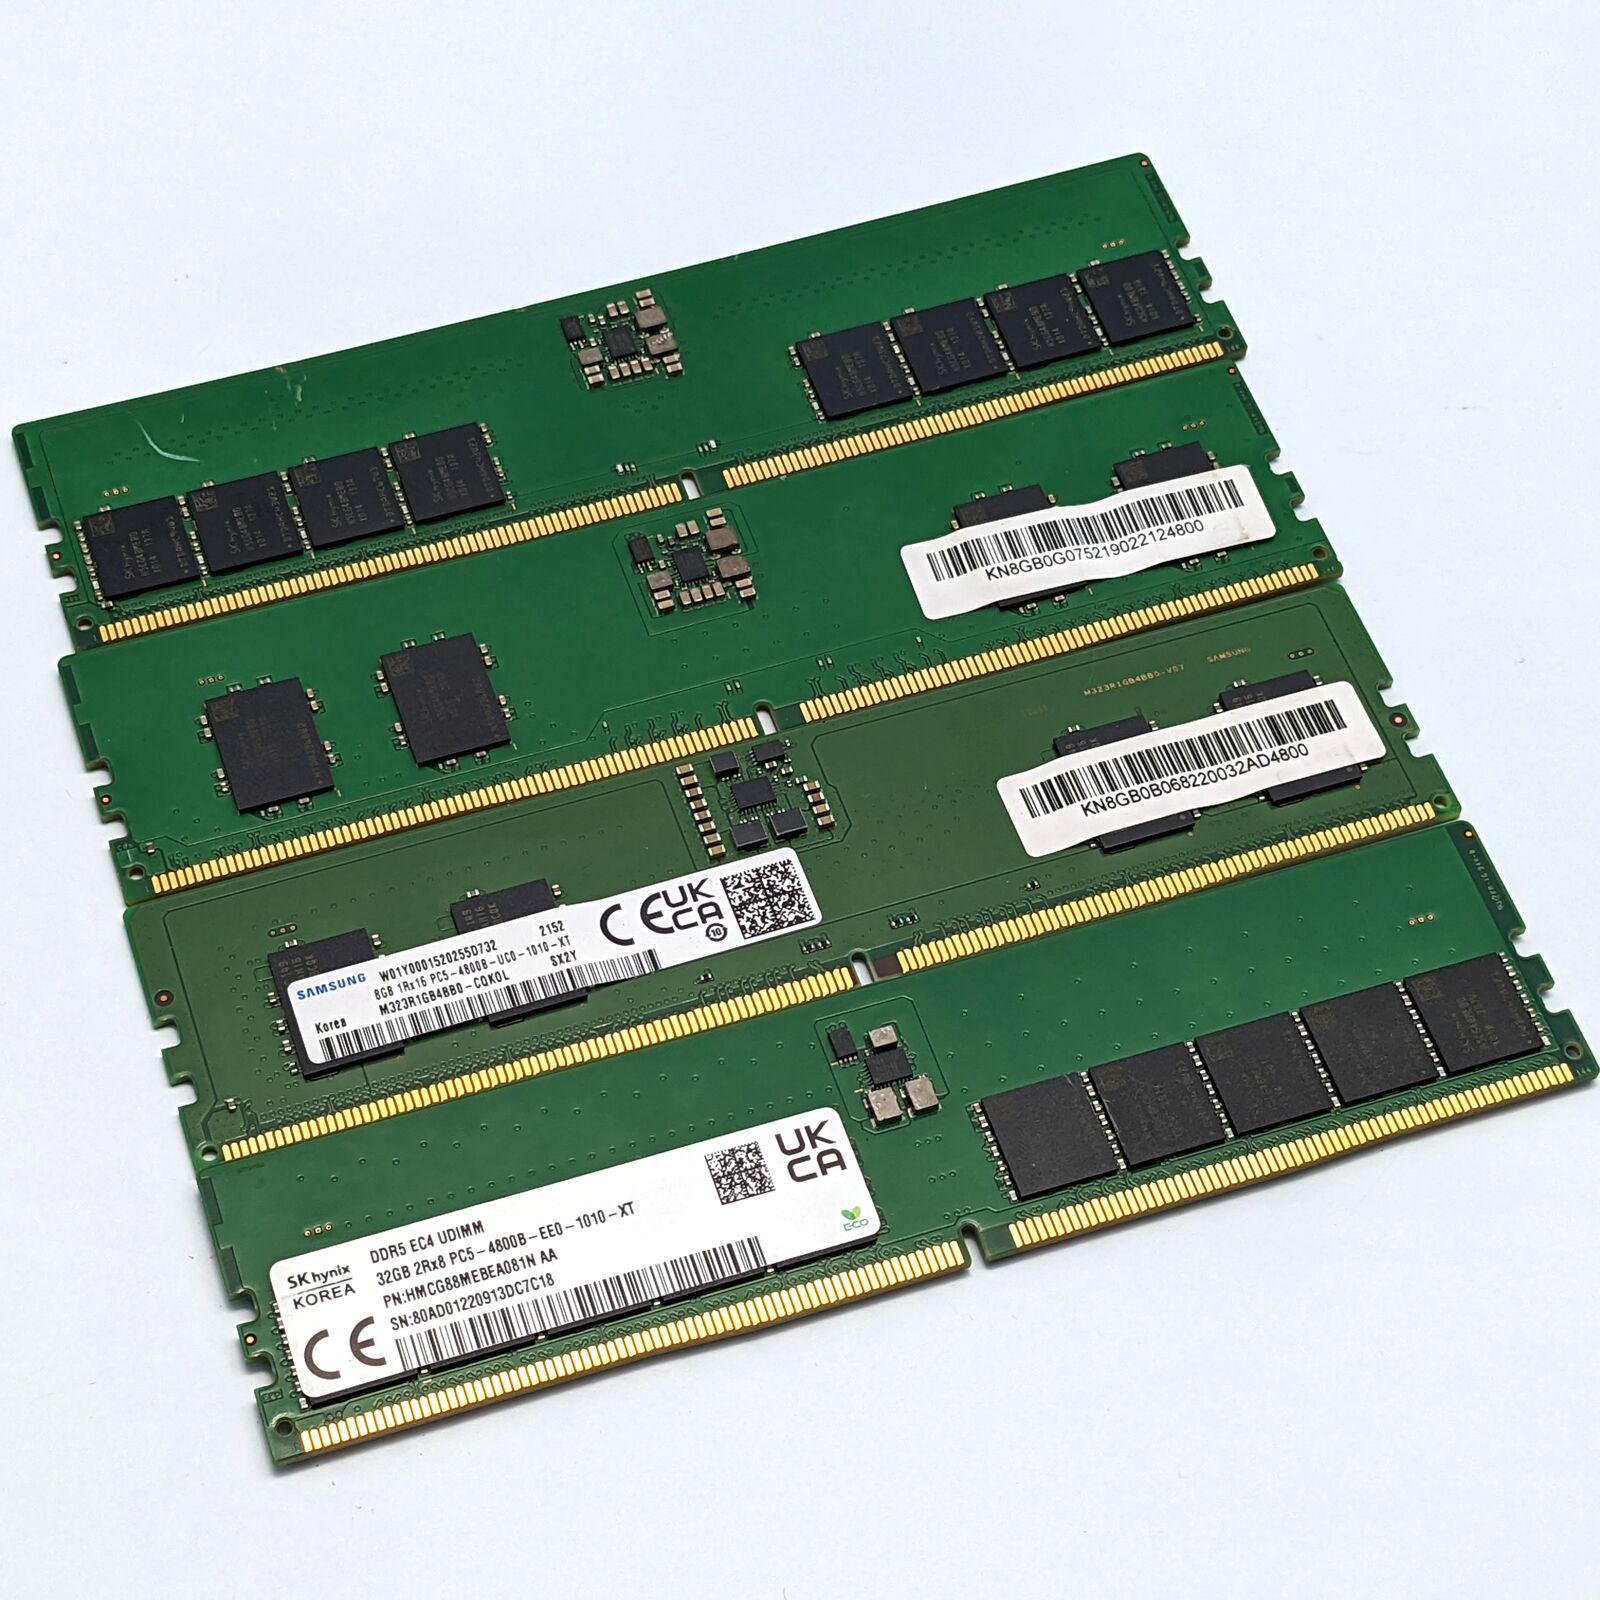 Assorted Set of SK Hynix / Samsung 16GB RAM Modules Lot of 4